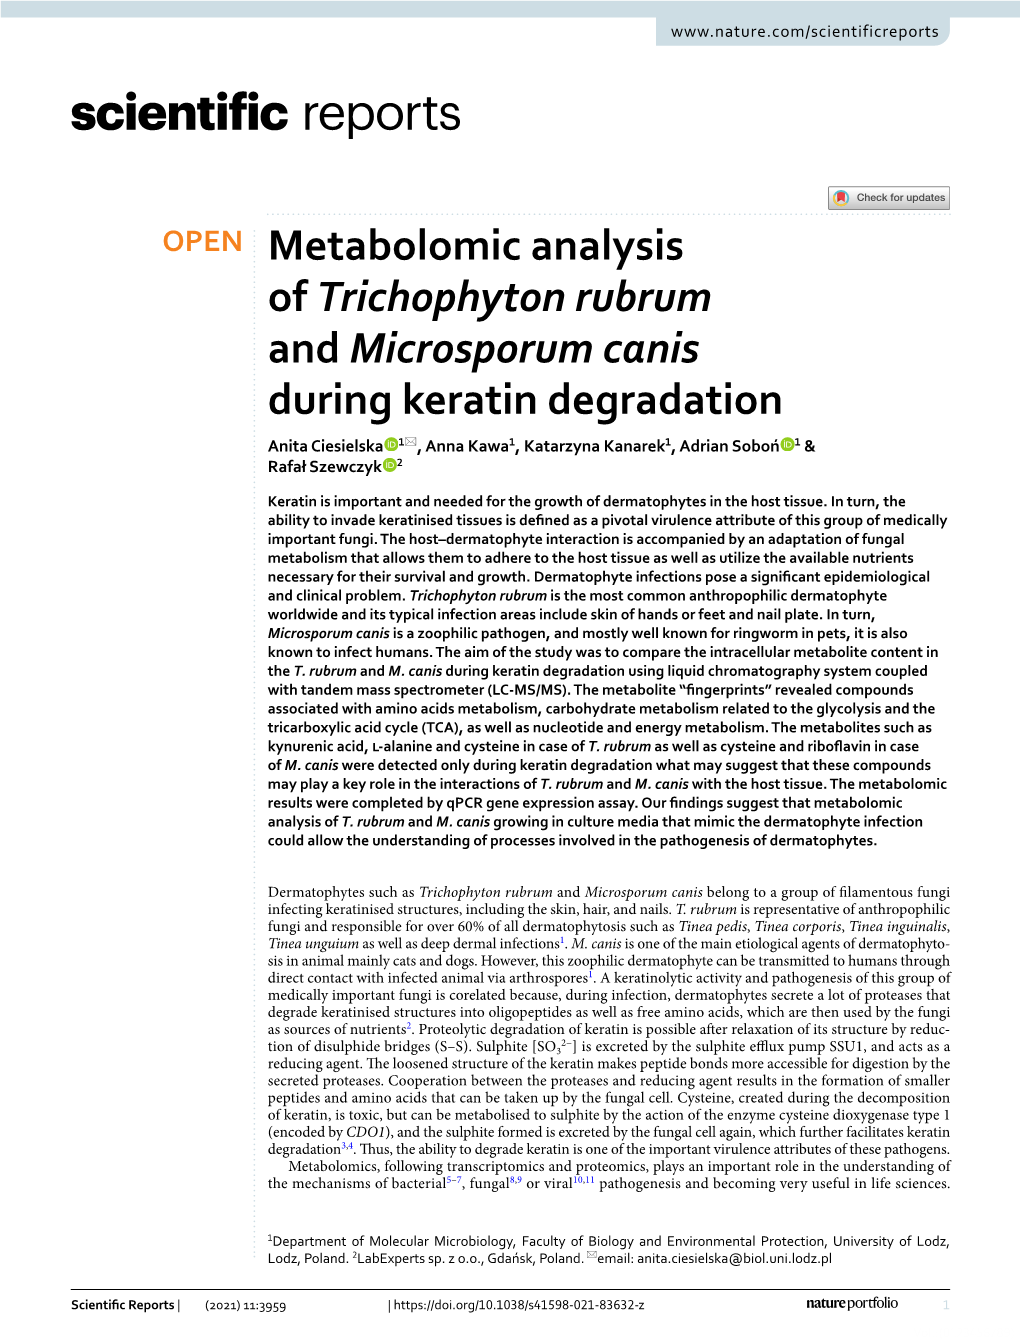 Metabolomic Analysis of Trichophyton Rubrum and Microsporum Canis